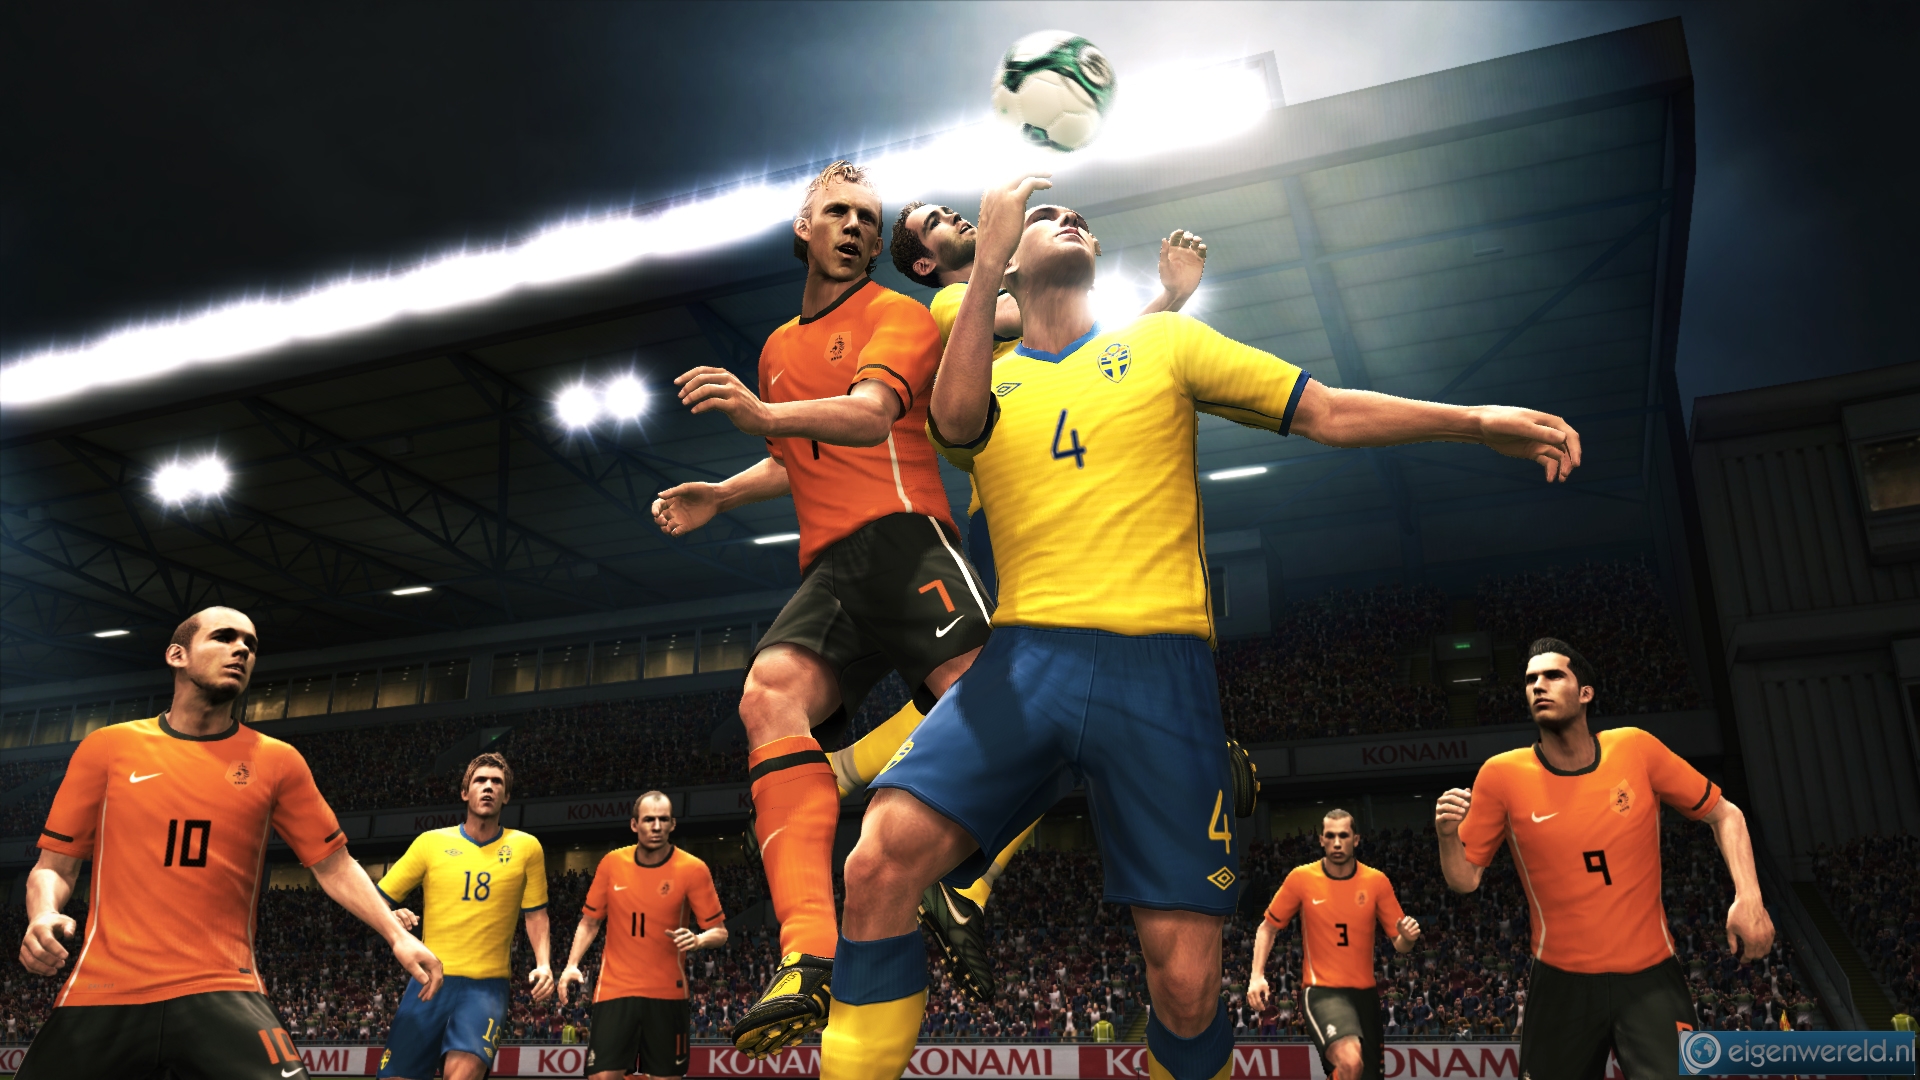 Screenshot van Pro Evolution Soccer 2011